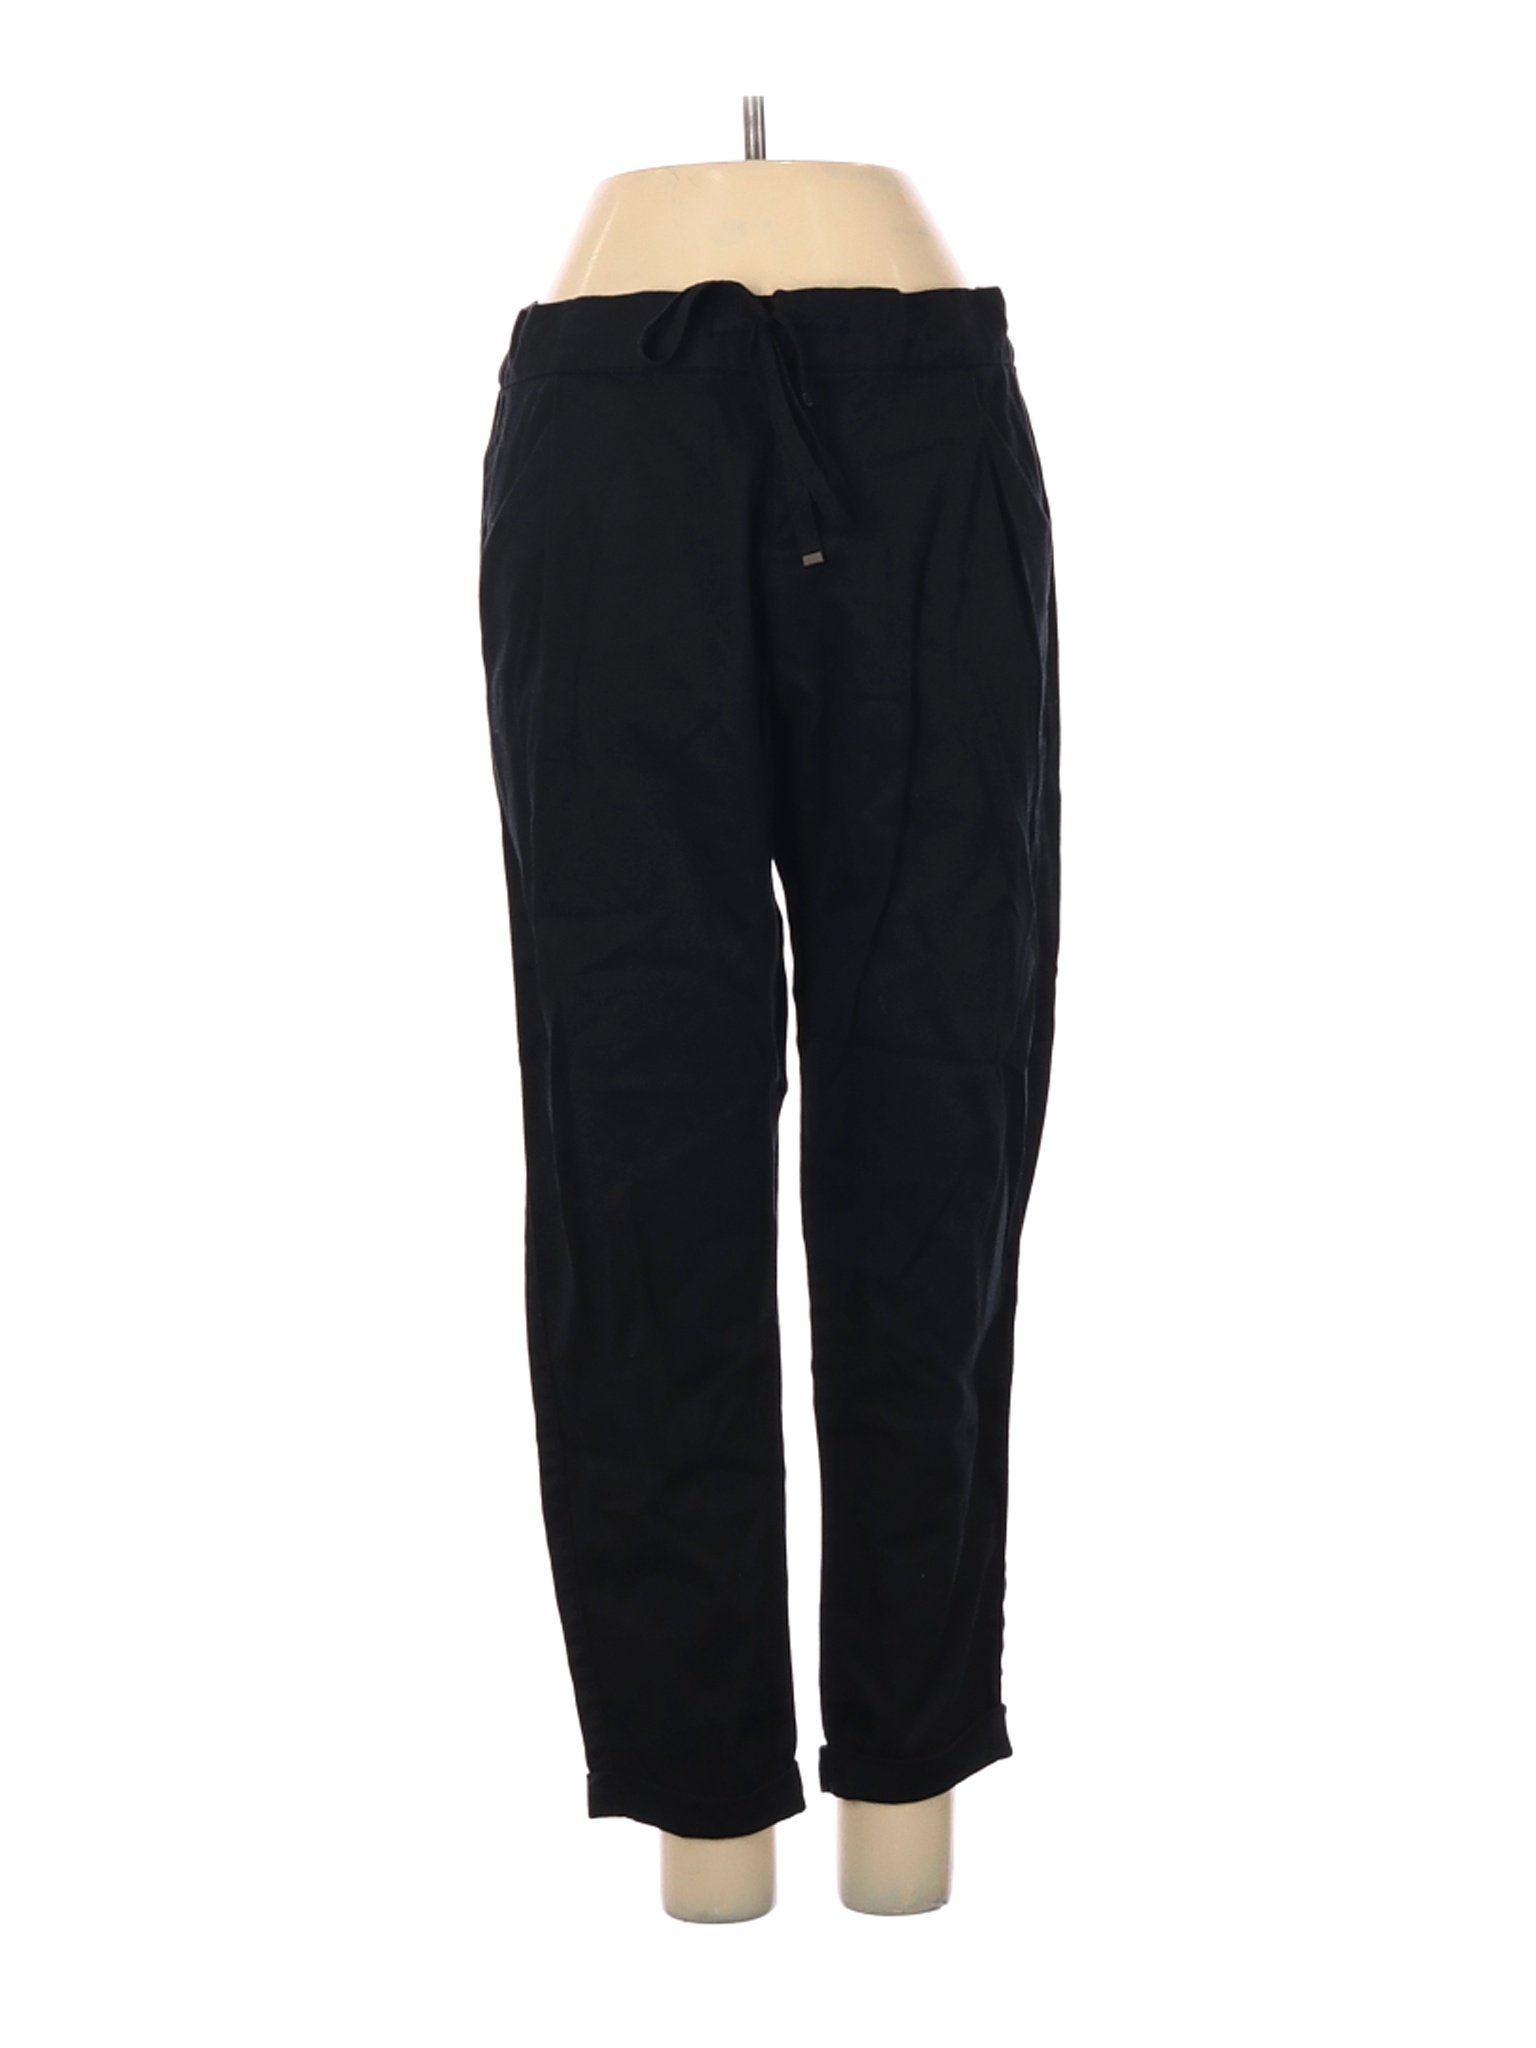 Old Navy Women Black Casual Pants 0 | eBay